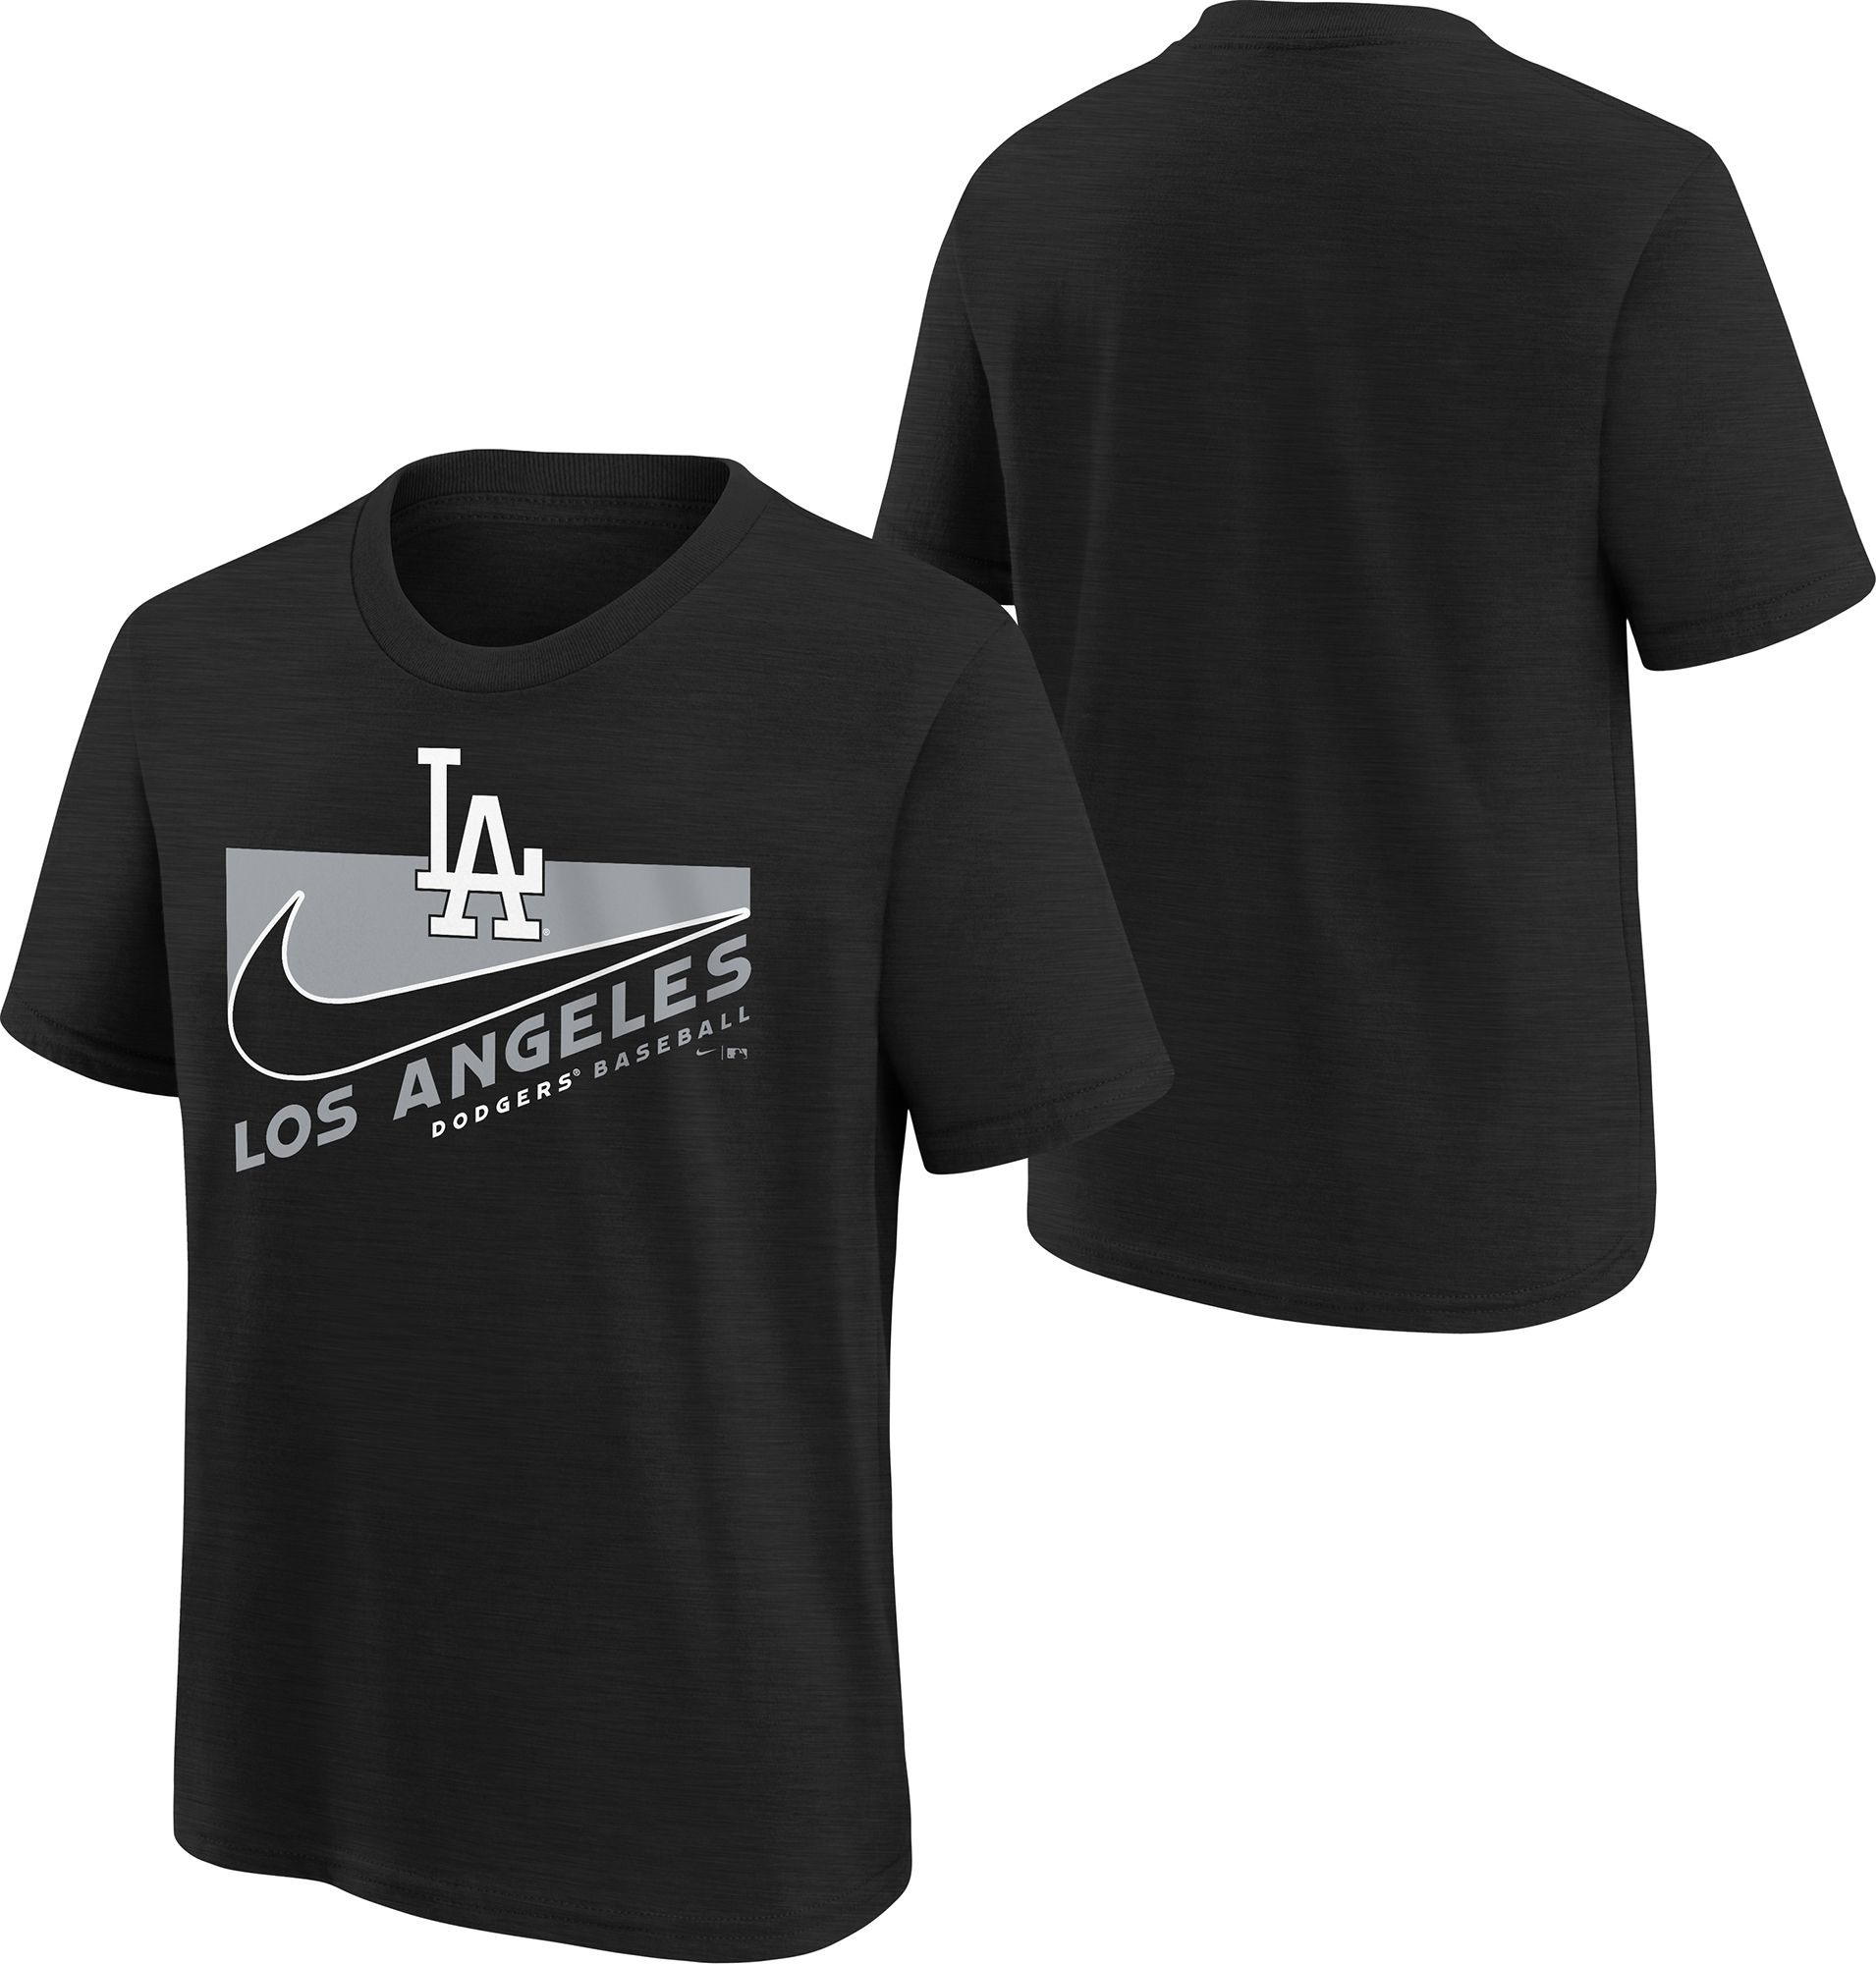 Grey Nike Mlb LA Dodgers T-Shirt